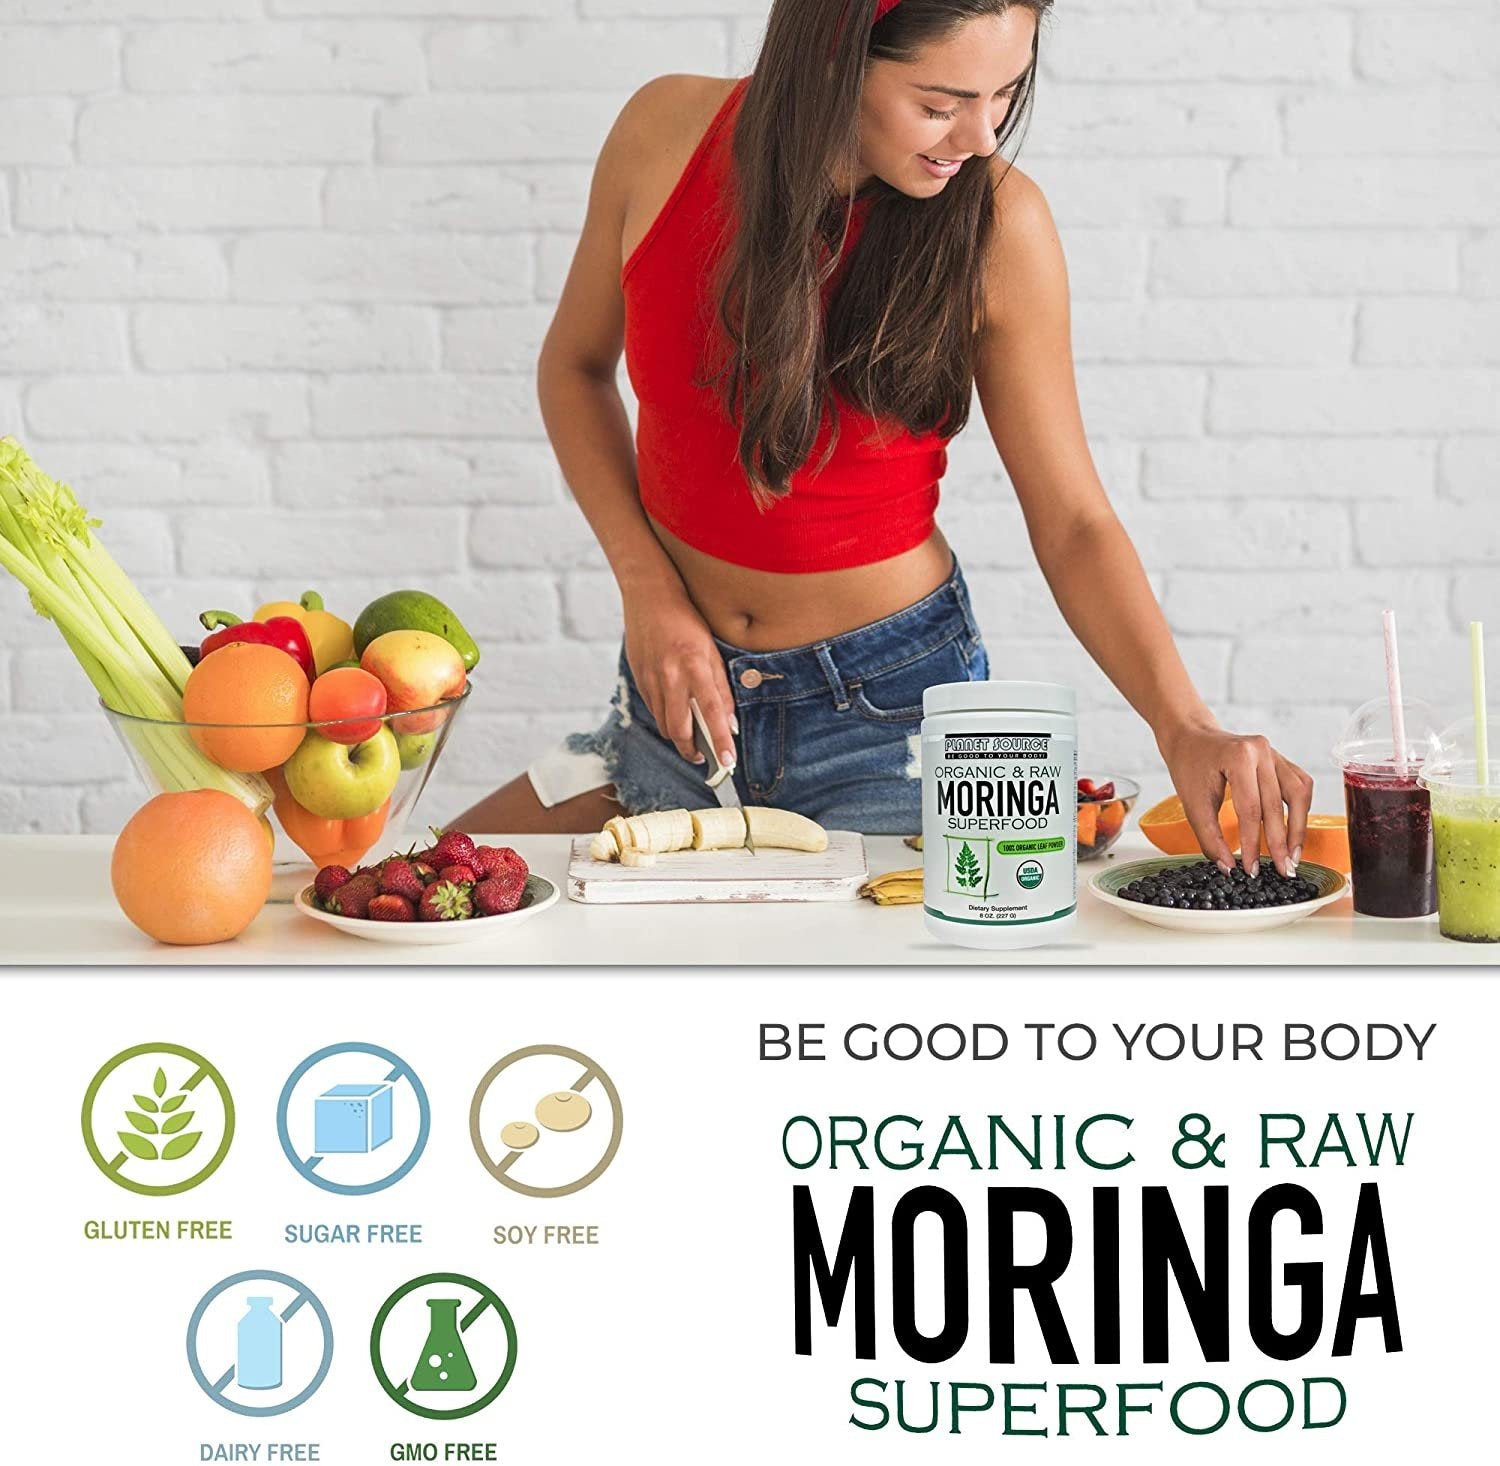 Planet Source 100% Raw & Pure Organic Moringa (Moringa oleifera) Powder superfood antioxidant, Promotes Healthy Blood Sugar 8 Oz